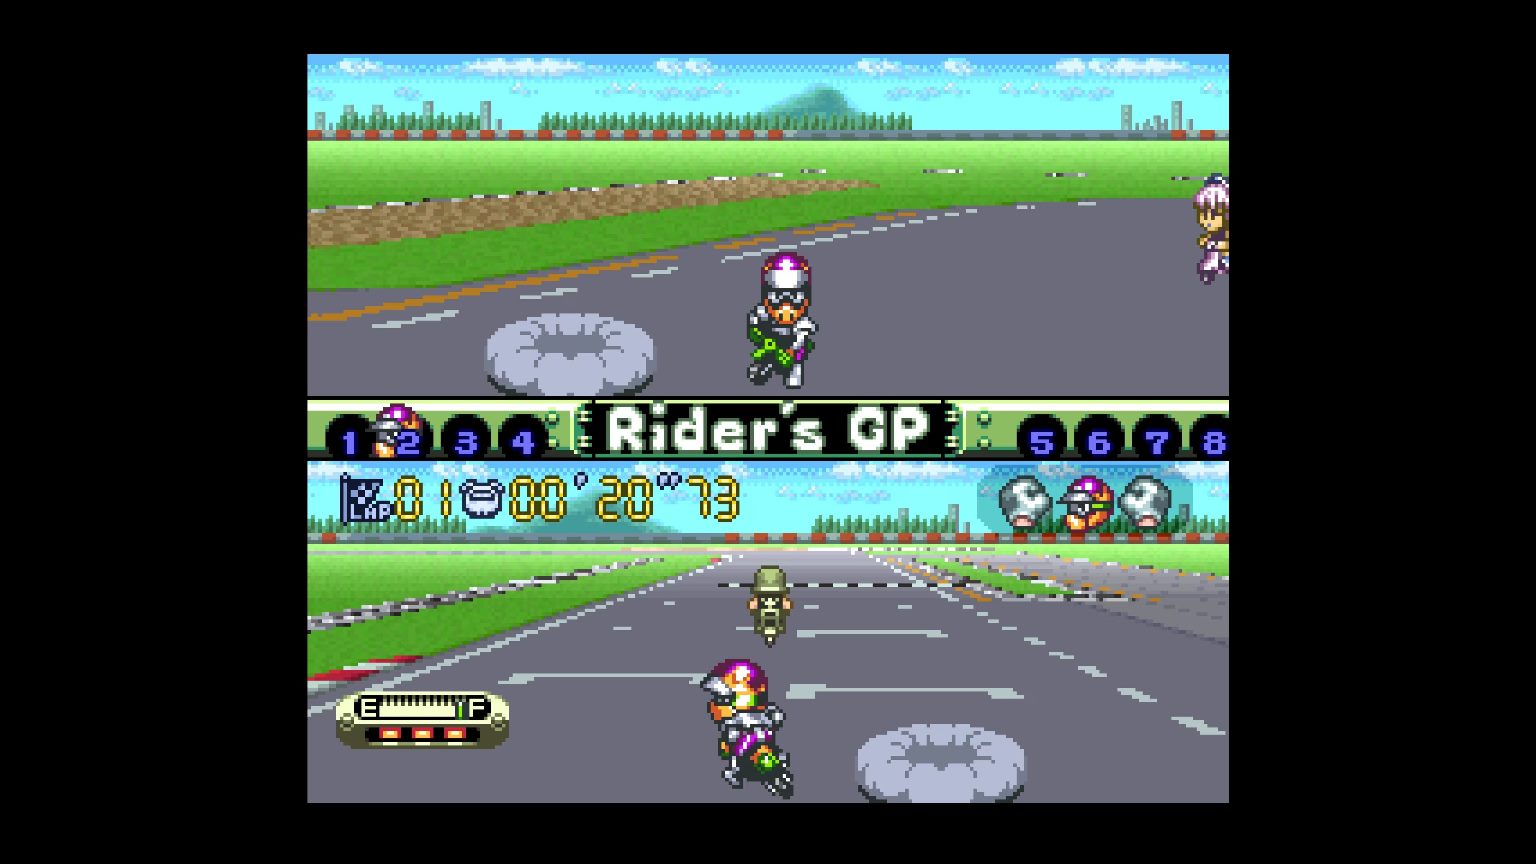 Rider's Spirits